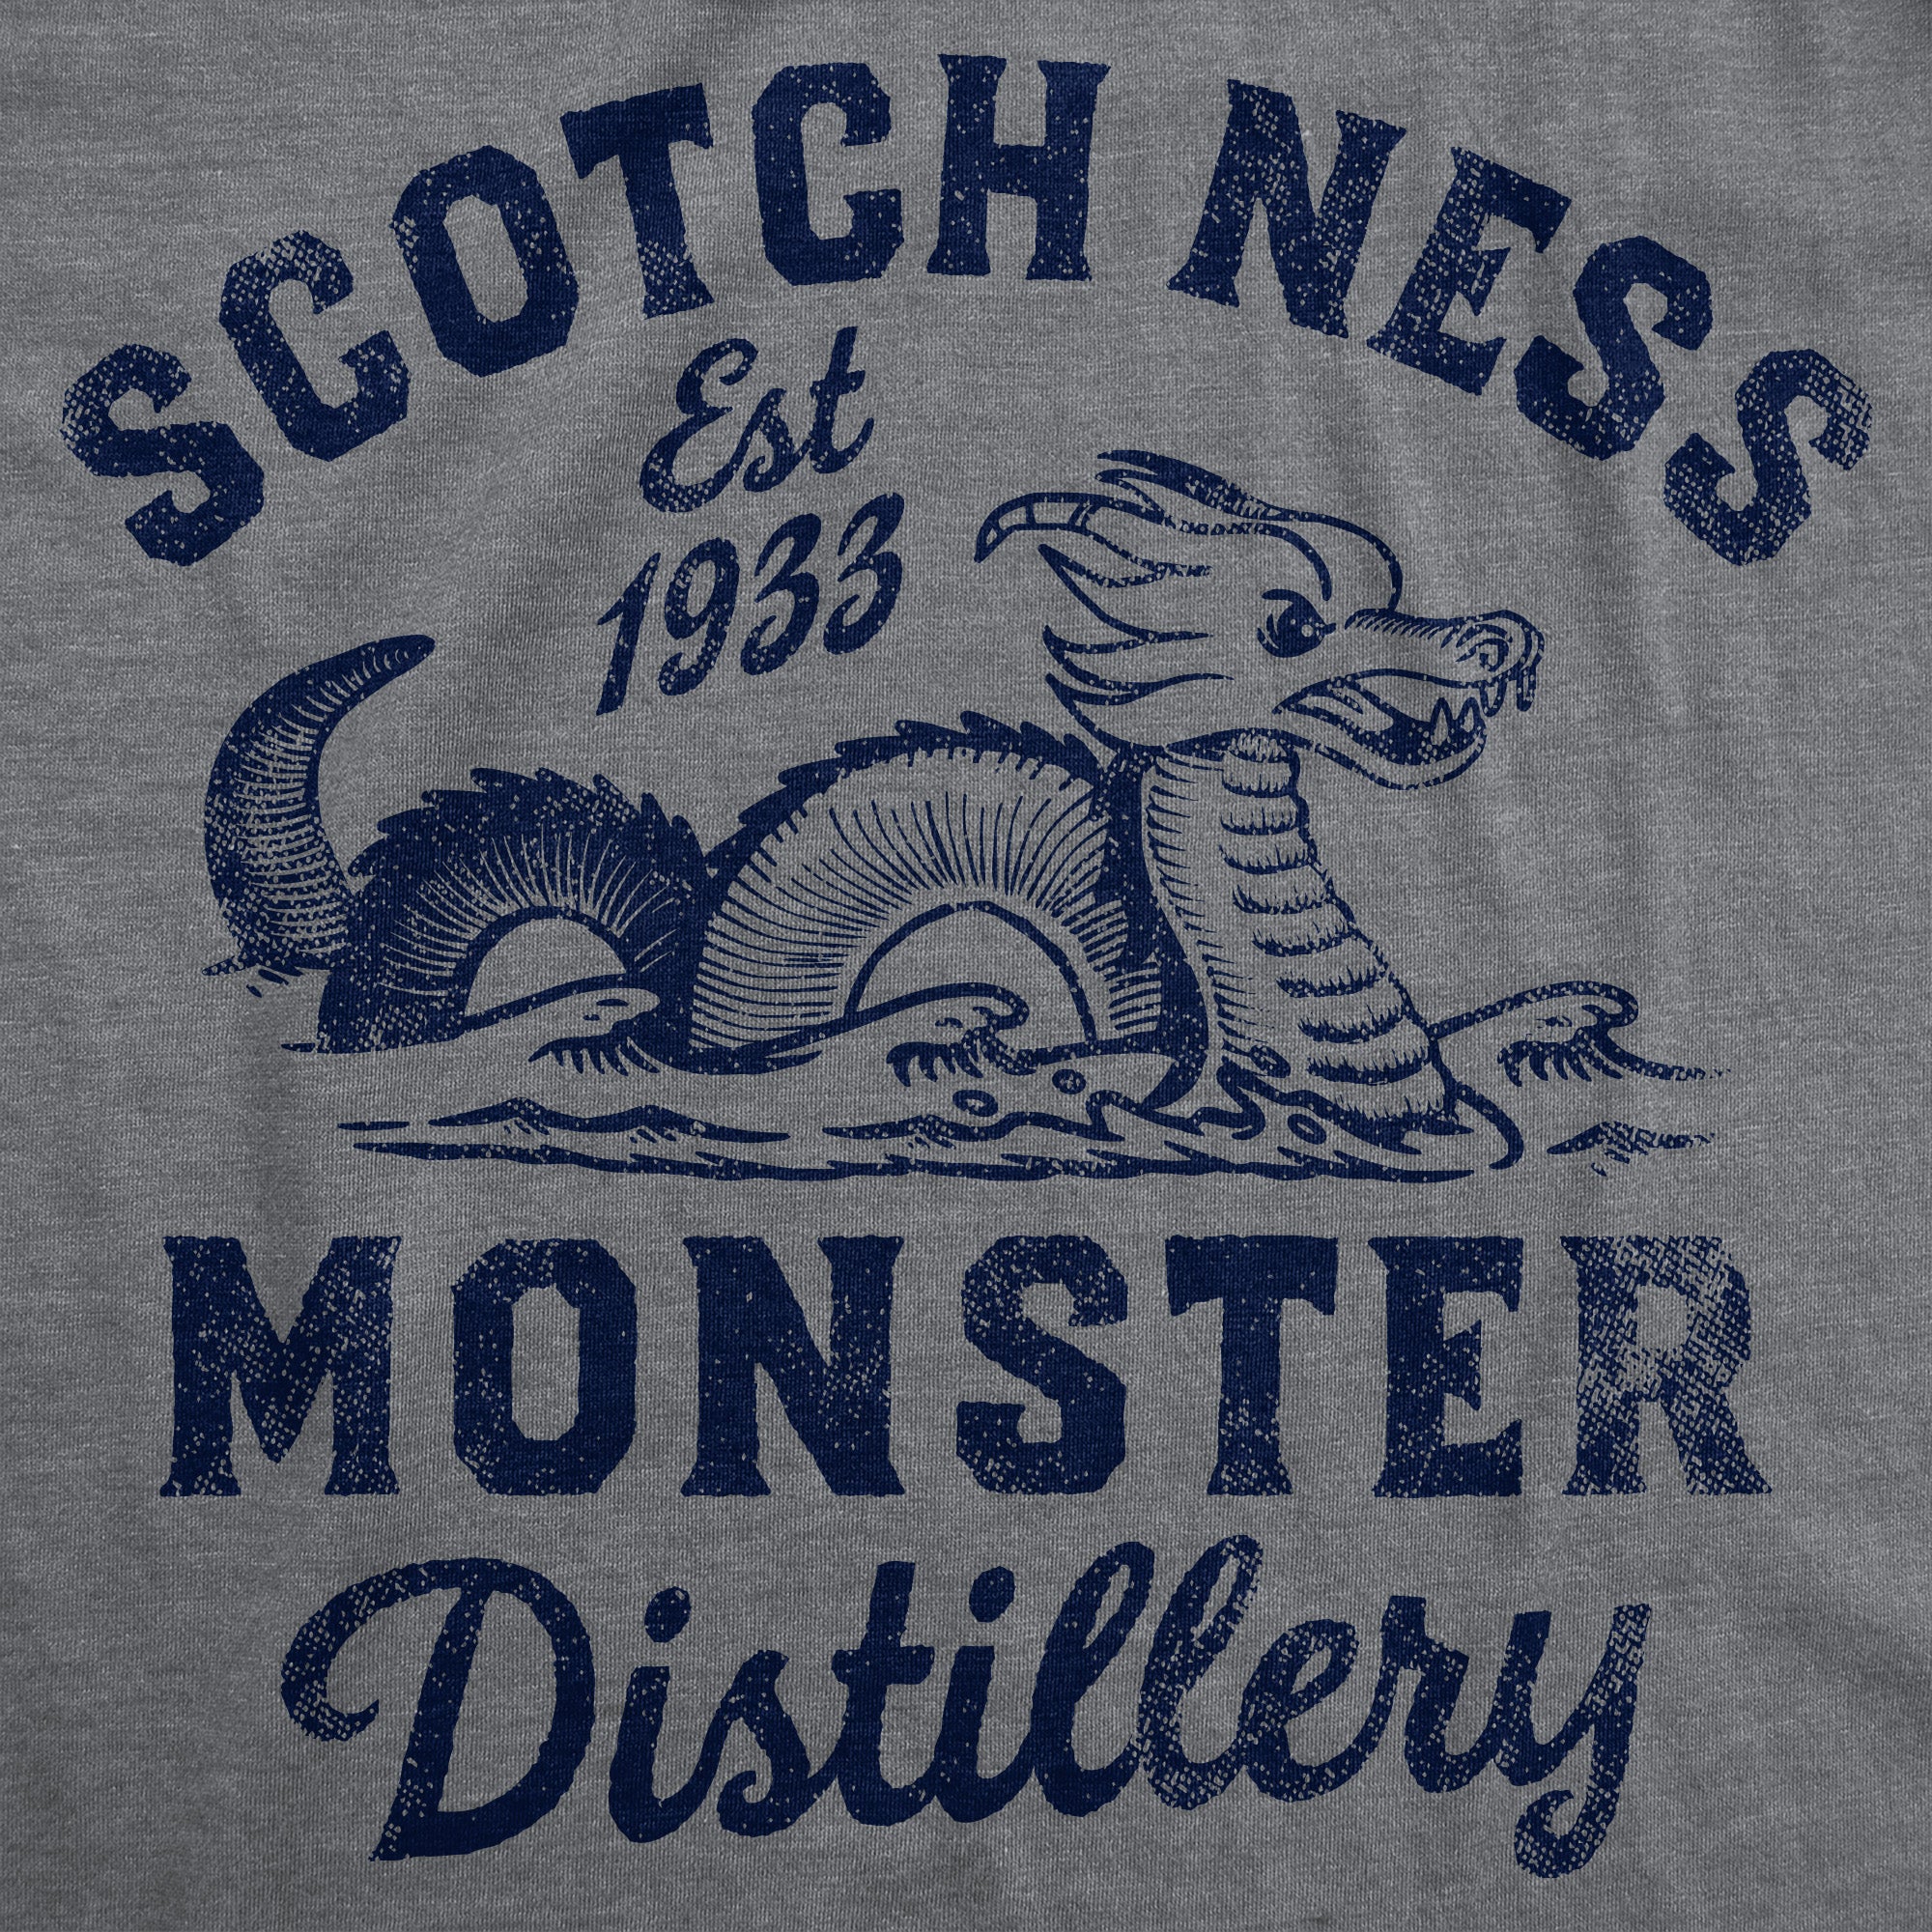 Funny Dark Heather Grey - Scotch Ness Monster Scotch Ness Monster Distillery Mens T Shirt Nerdy Liquor sarcastic Tee